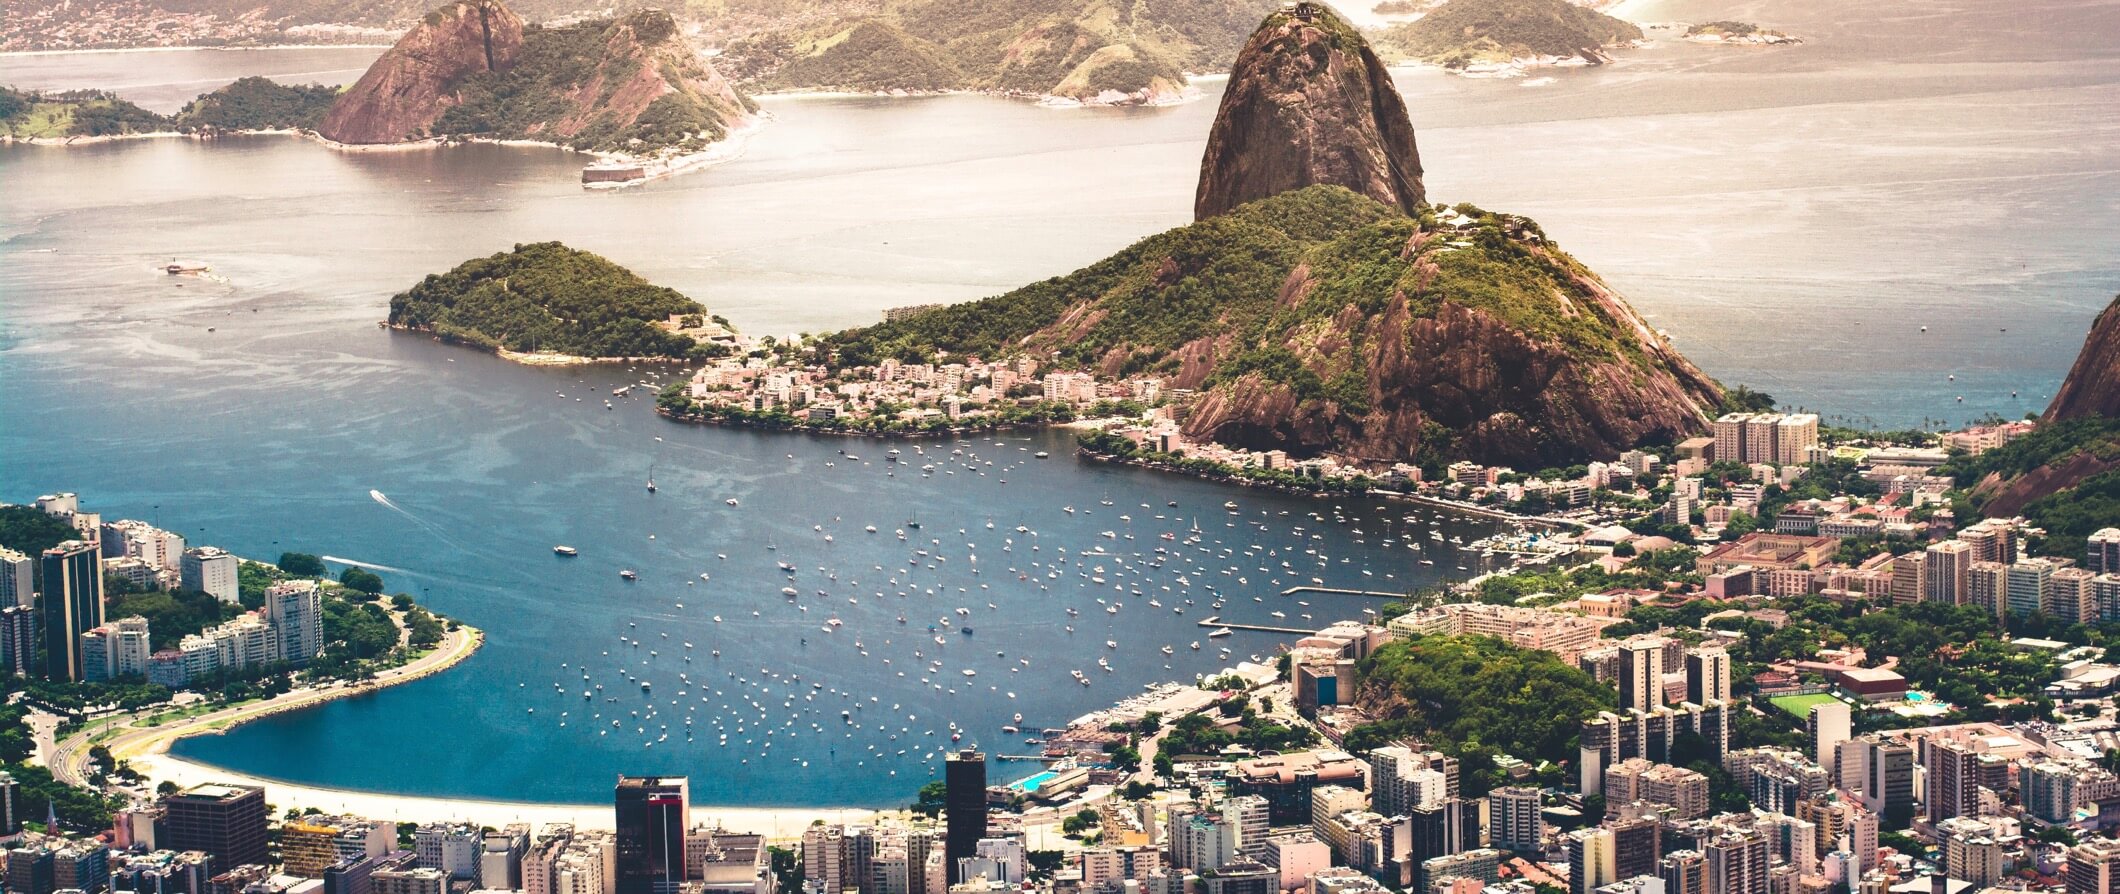 Trips to Rio de Janeiro: Enjoy Vacation in Brazil